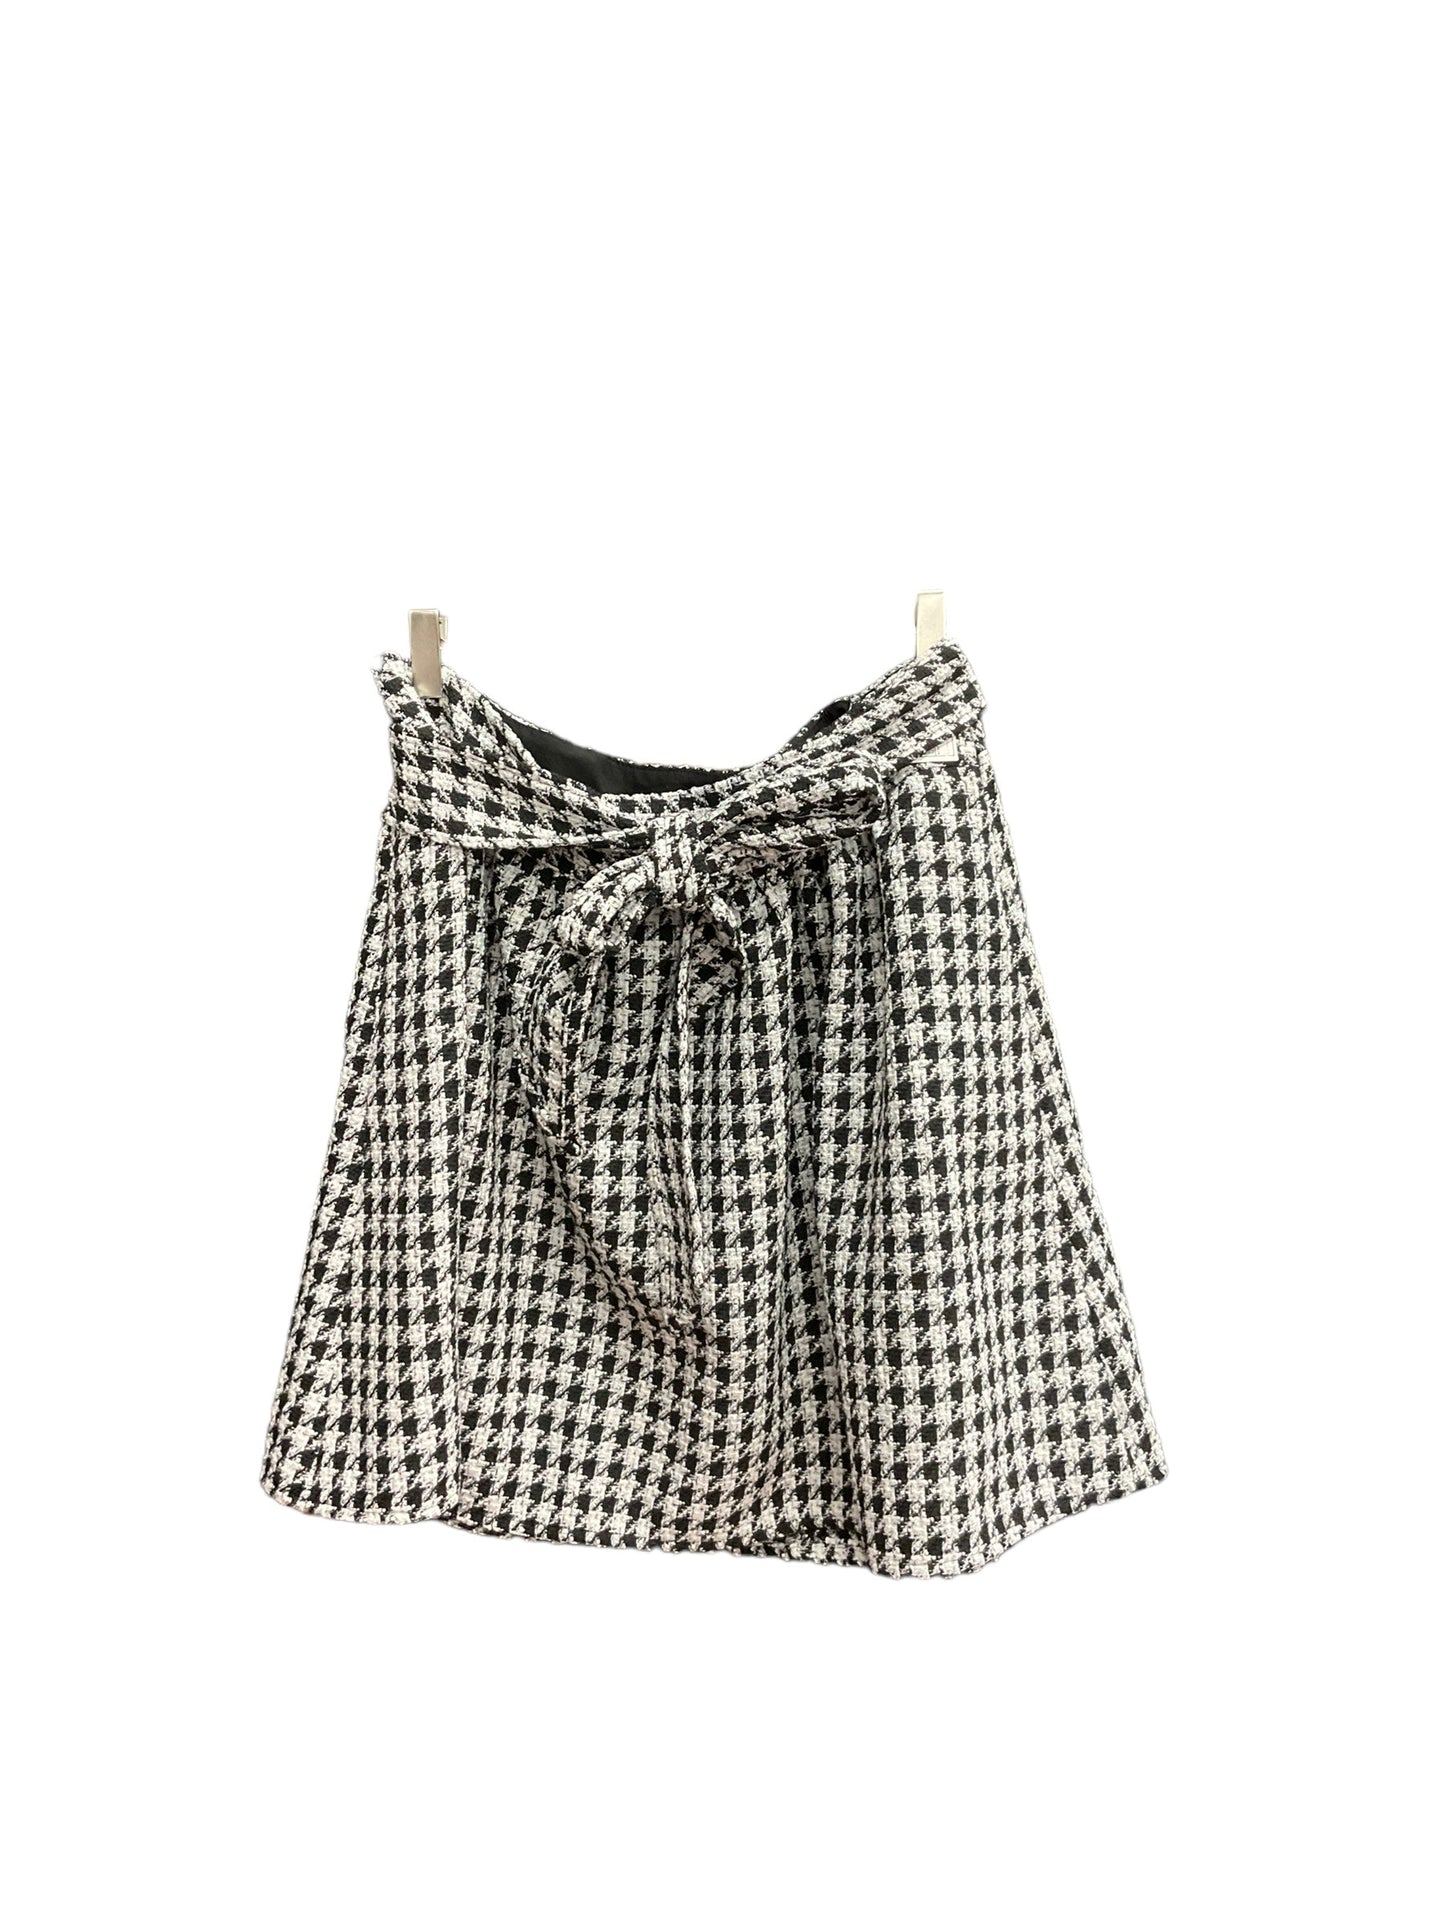 Black & White Skirt Mini & Short Express, Size 14